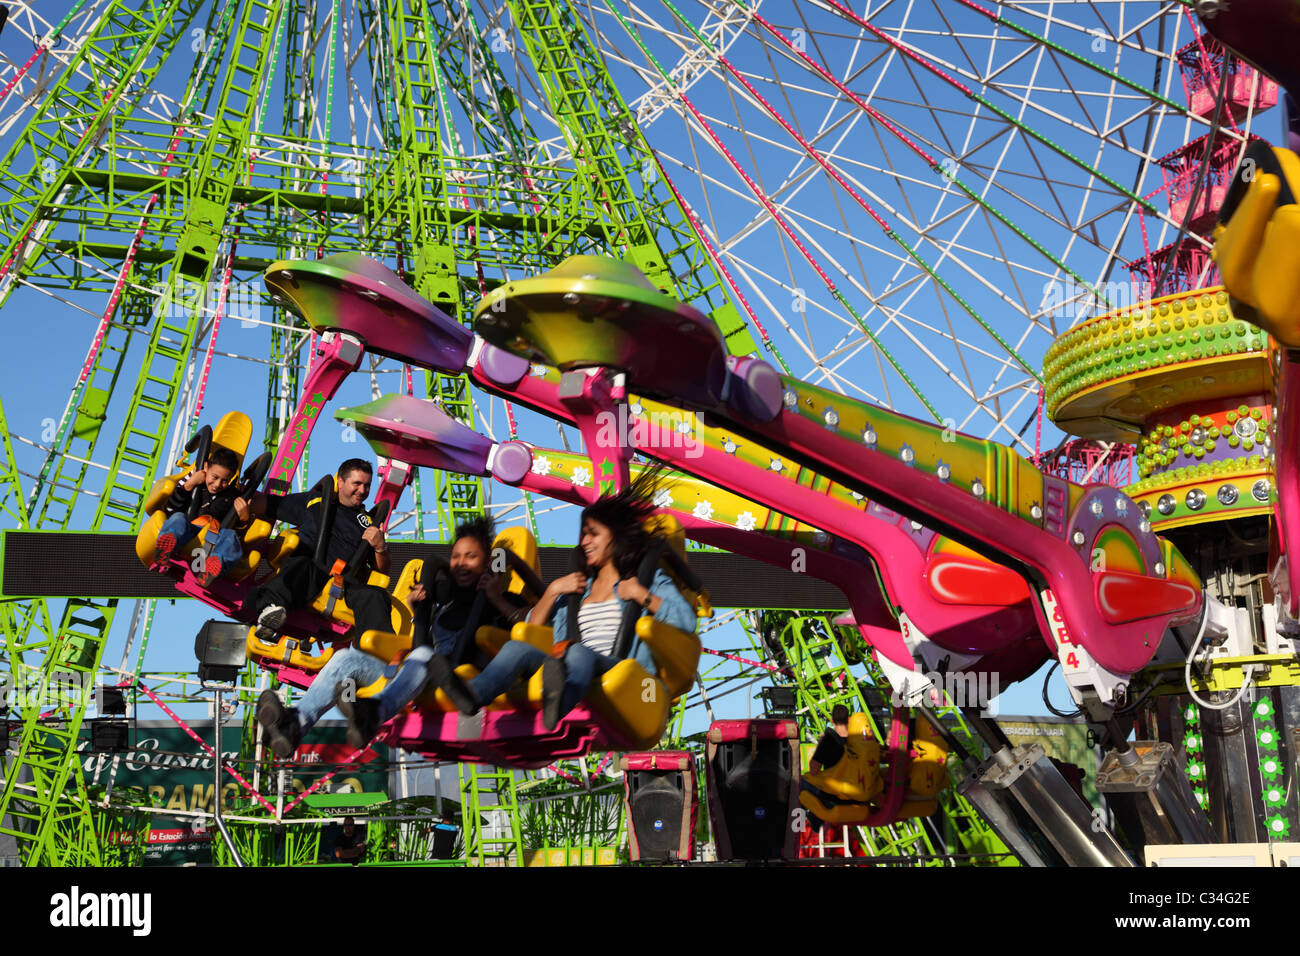 Amusement park ride in Santa Cruz de Tenerife, Spain. Stock Photo